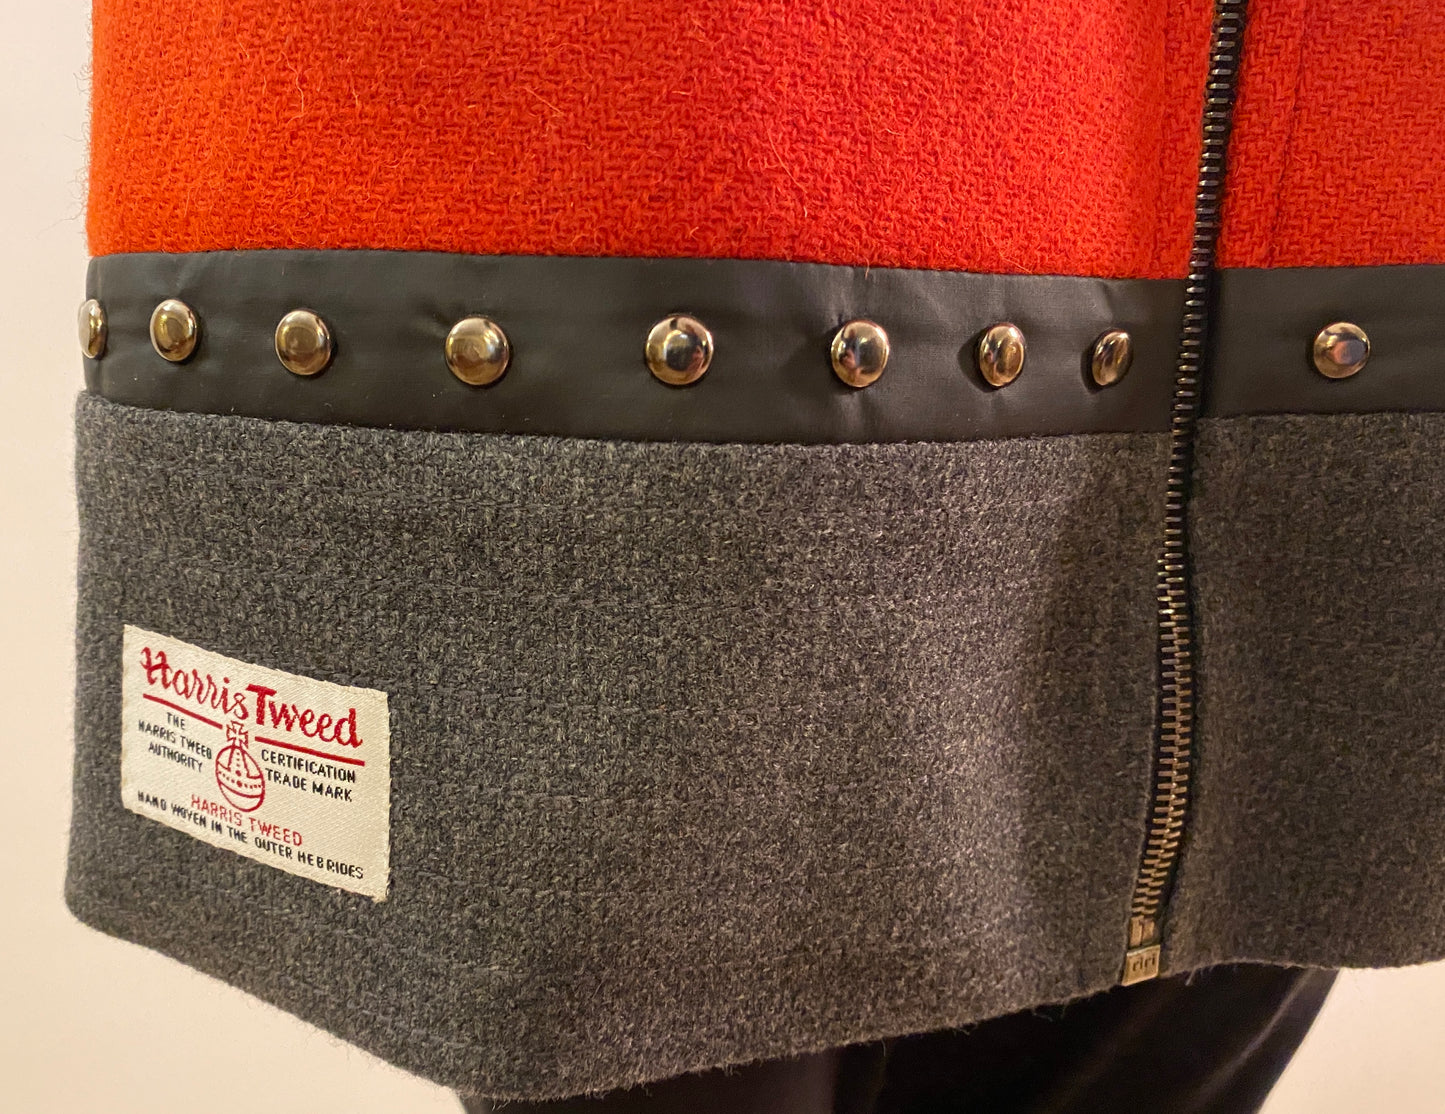 Lantern Vest. Orange Harris Tweed with Charcoal trim